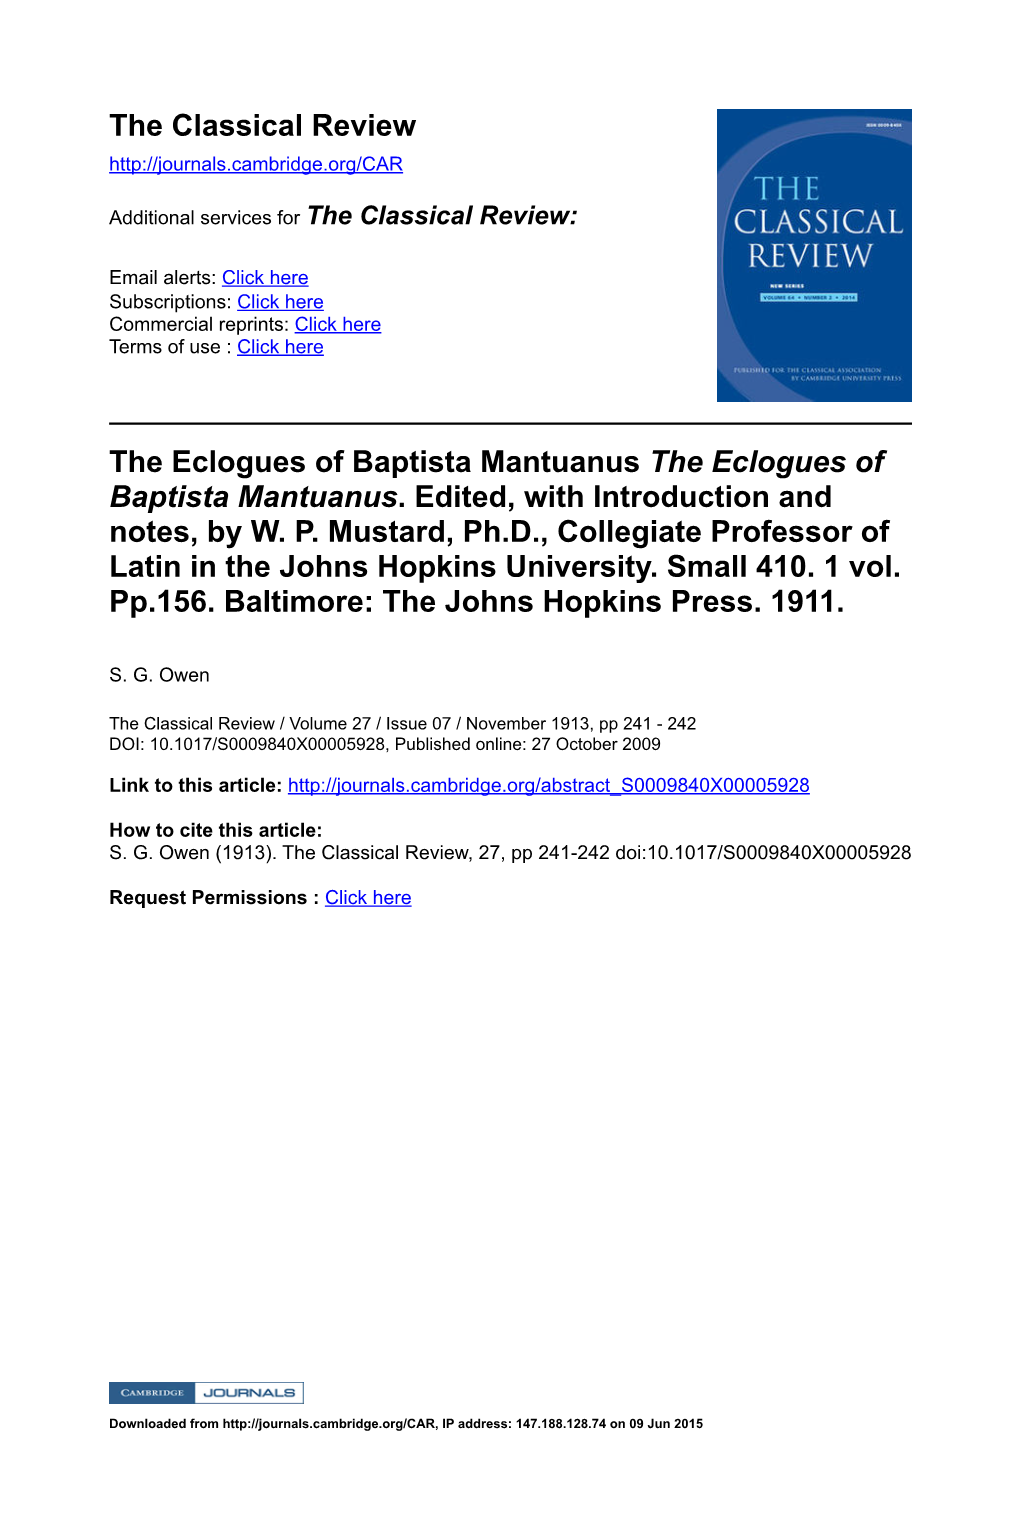 The Eclogues of Baptista Mantuanus the Eclogues of Baptista Mantuanus